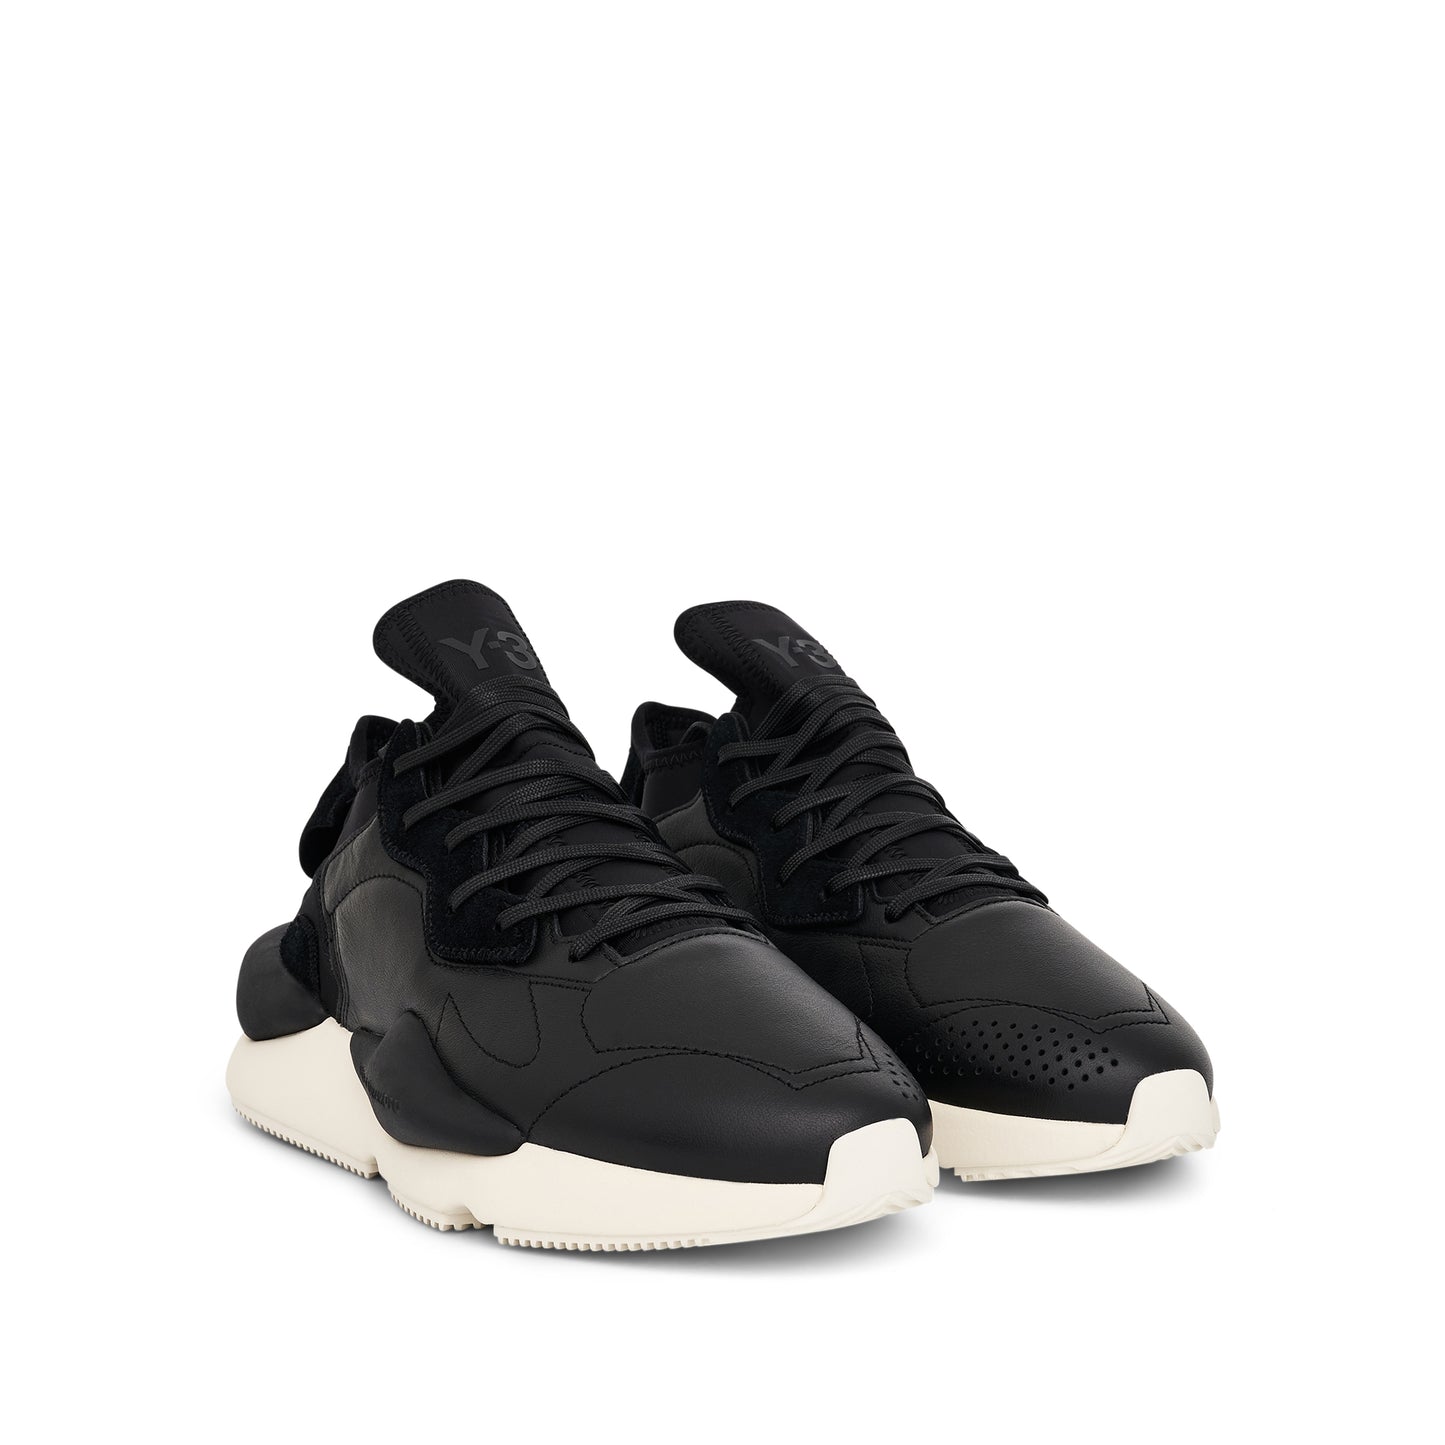 Kaiwa Sneaker in Black/Off White